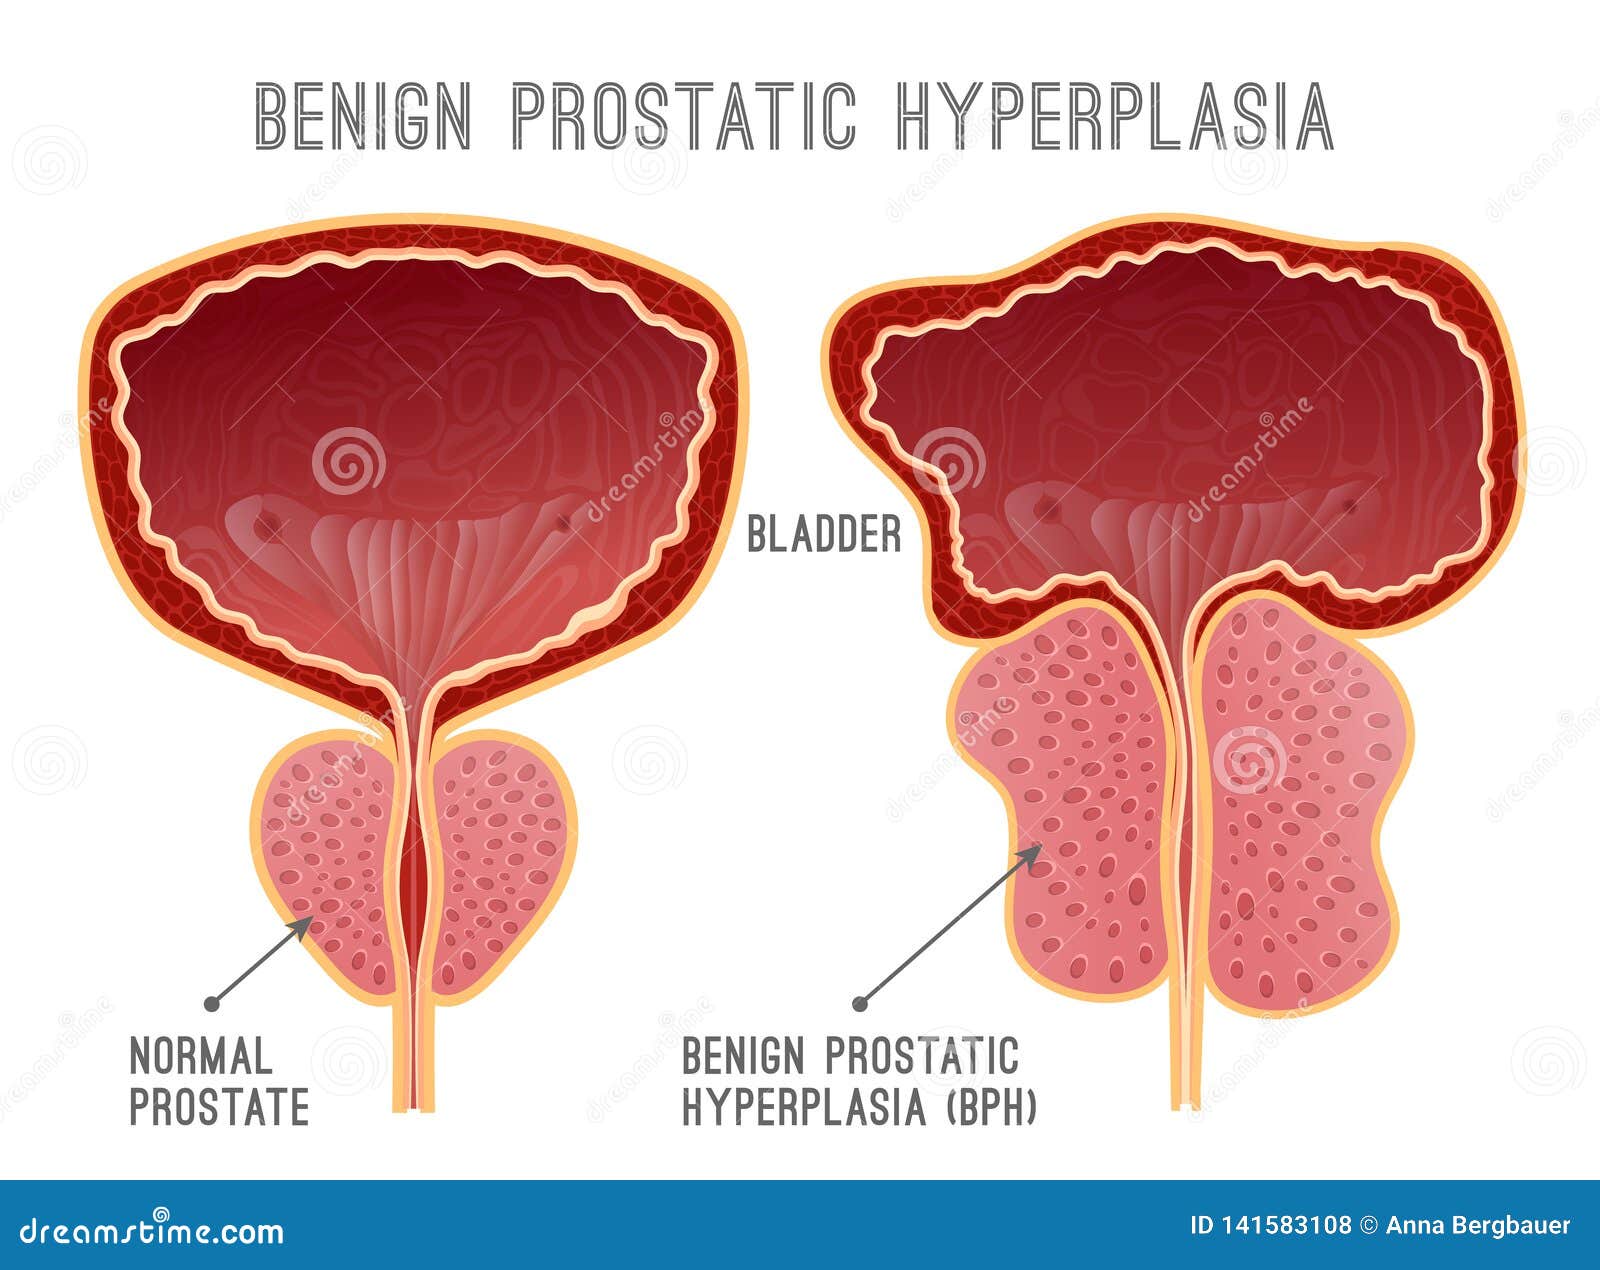 prostate-disease-infographic-benign-prostatic-hyperplasia-prostate-disease-infographic-urology-medical-image-urinary-bladder-141583108